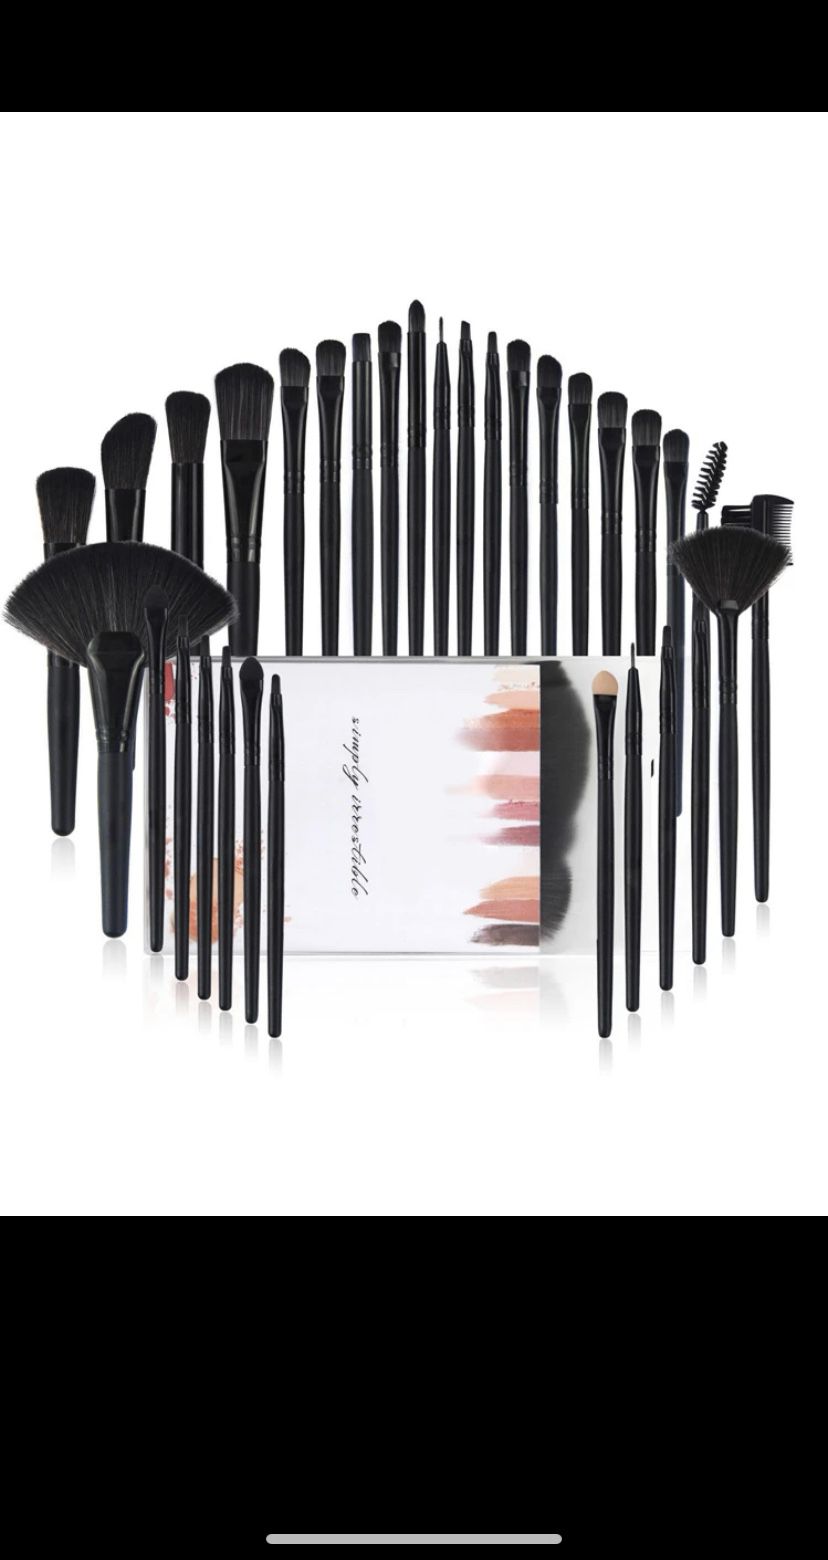 A set of 32 Piece black makeup Brushes,makeup blush, concealer, gloss and lip brush 